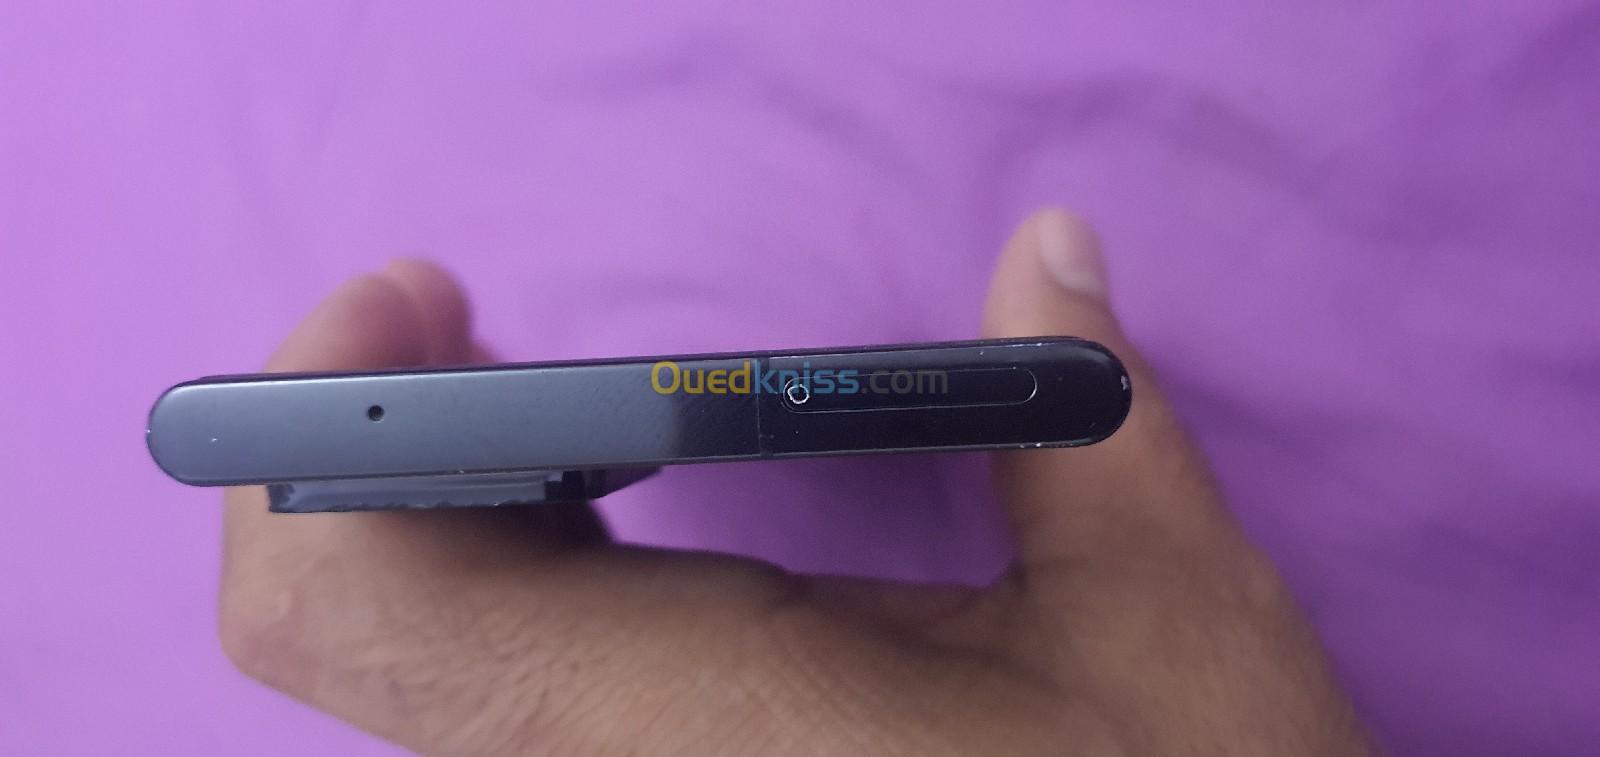 Samsung Galaxy Note 20 Ultra (N986U1) Snapdragon, Double Puces, Mémoire 512GB, RAM 12GB